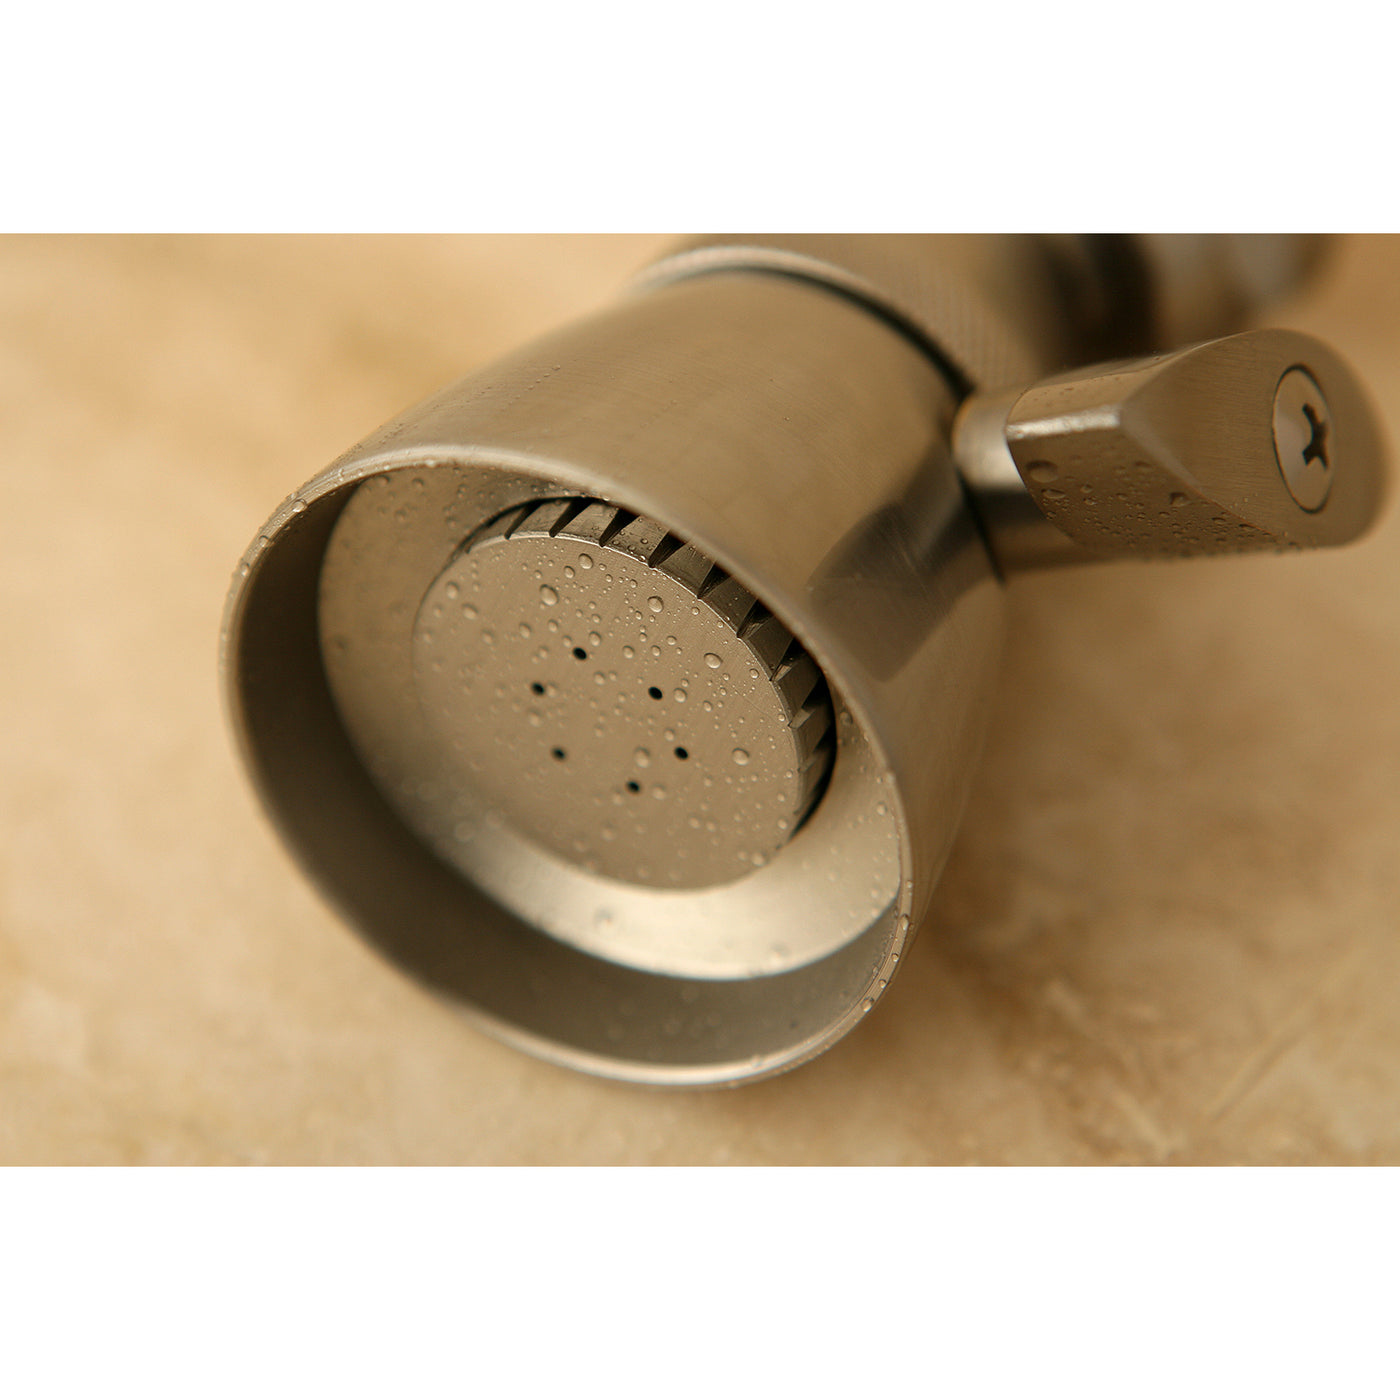 Elements of Design DK131A8 1-3/4 Inch Adjustable Spray Shower Head, Brushed Nickel